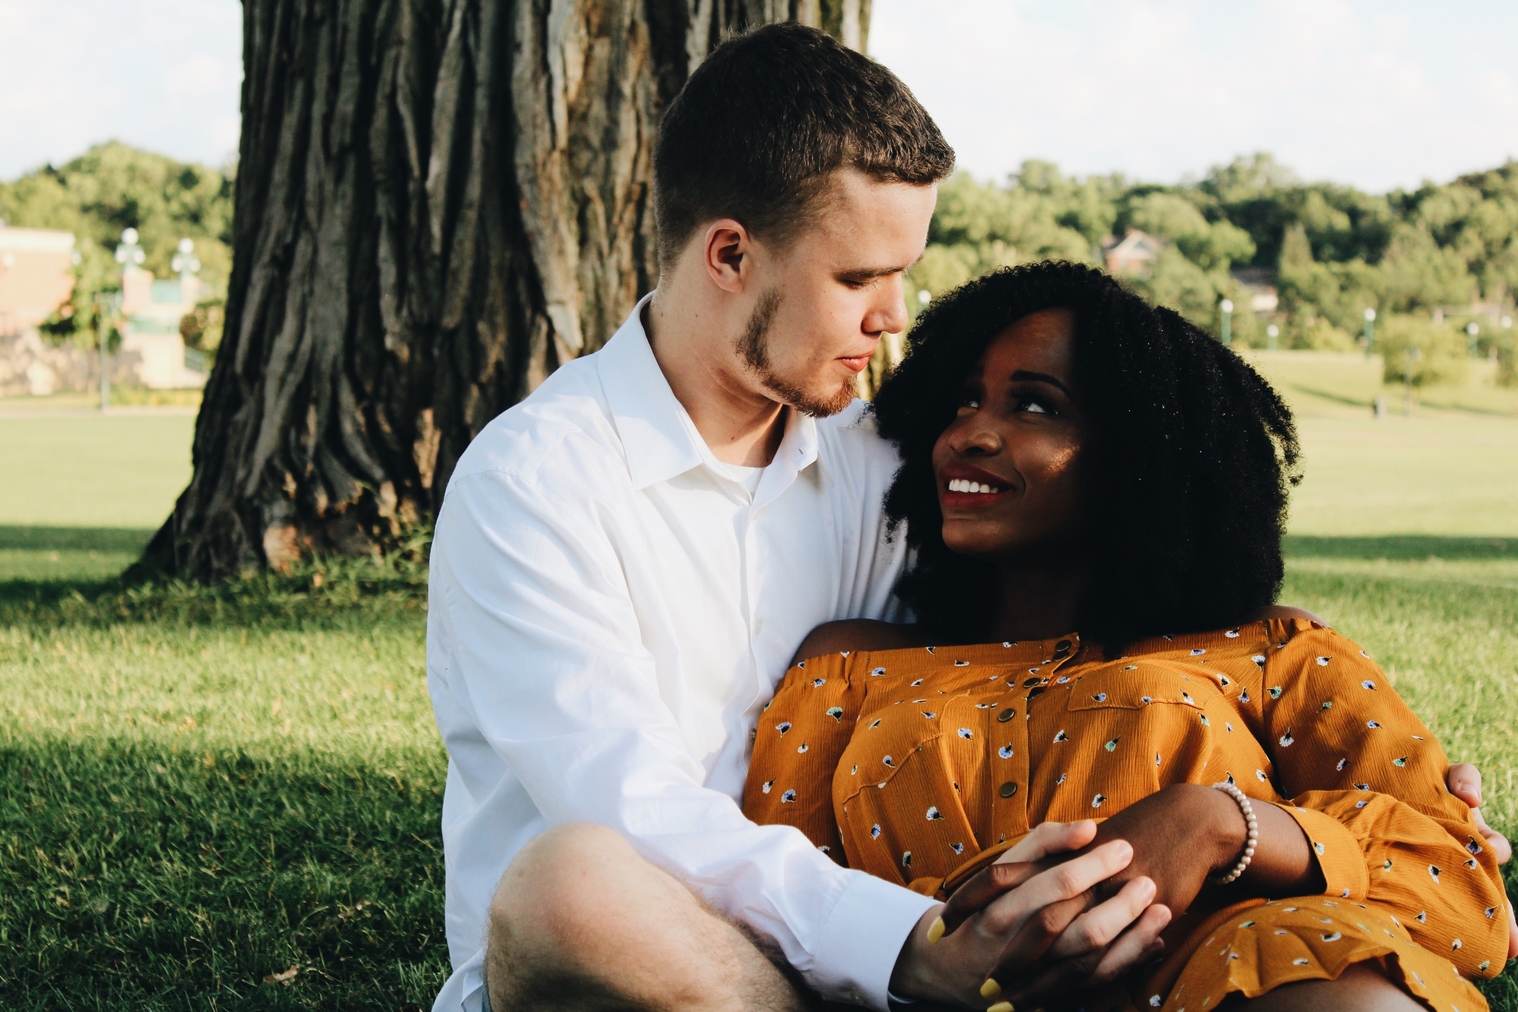 Black white interracial dating